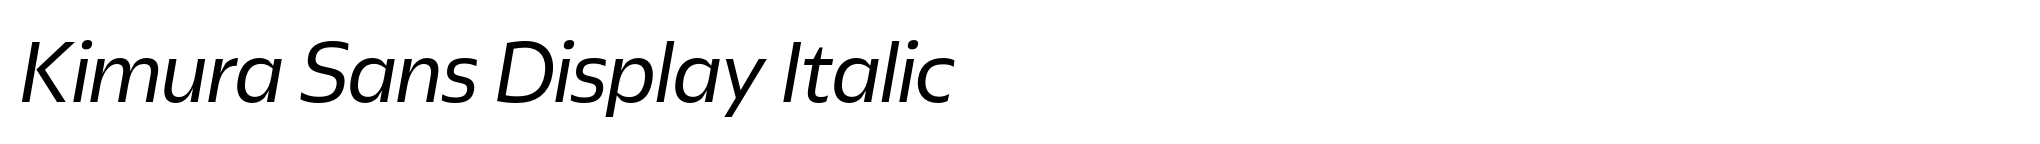 Kimura Sans Display Italic image